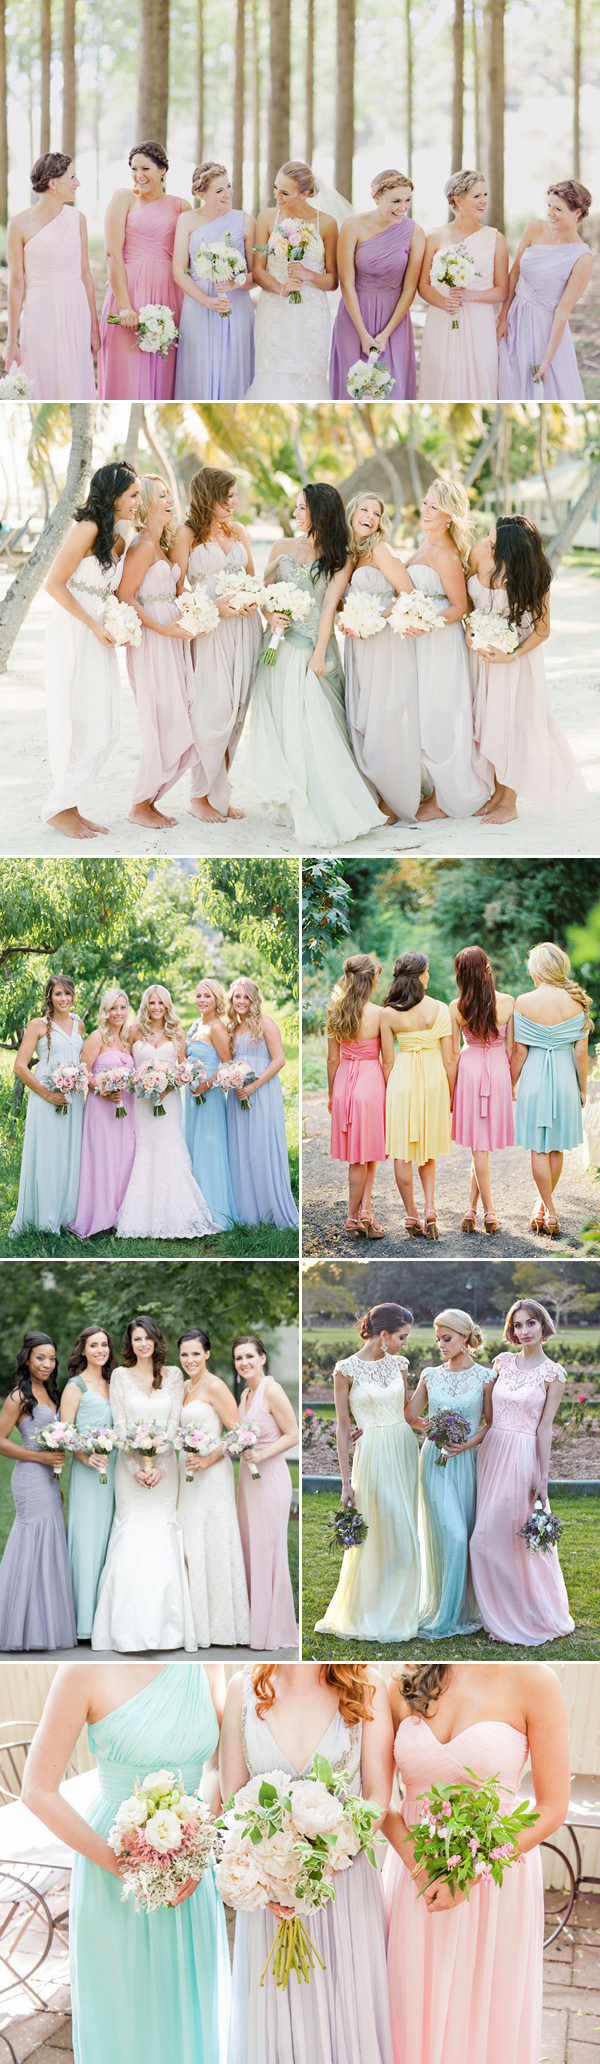 bridesmaid04-pastel